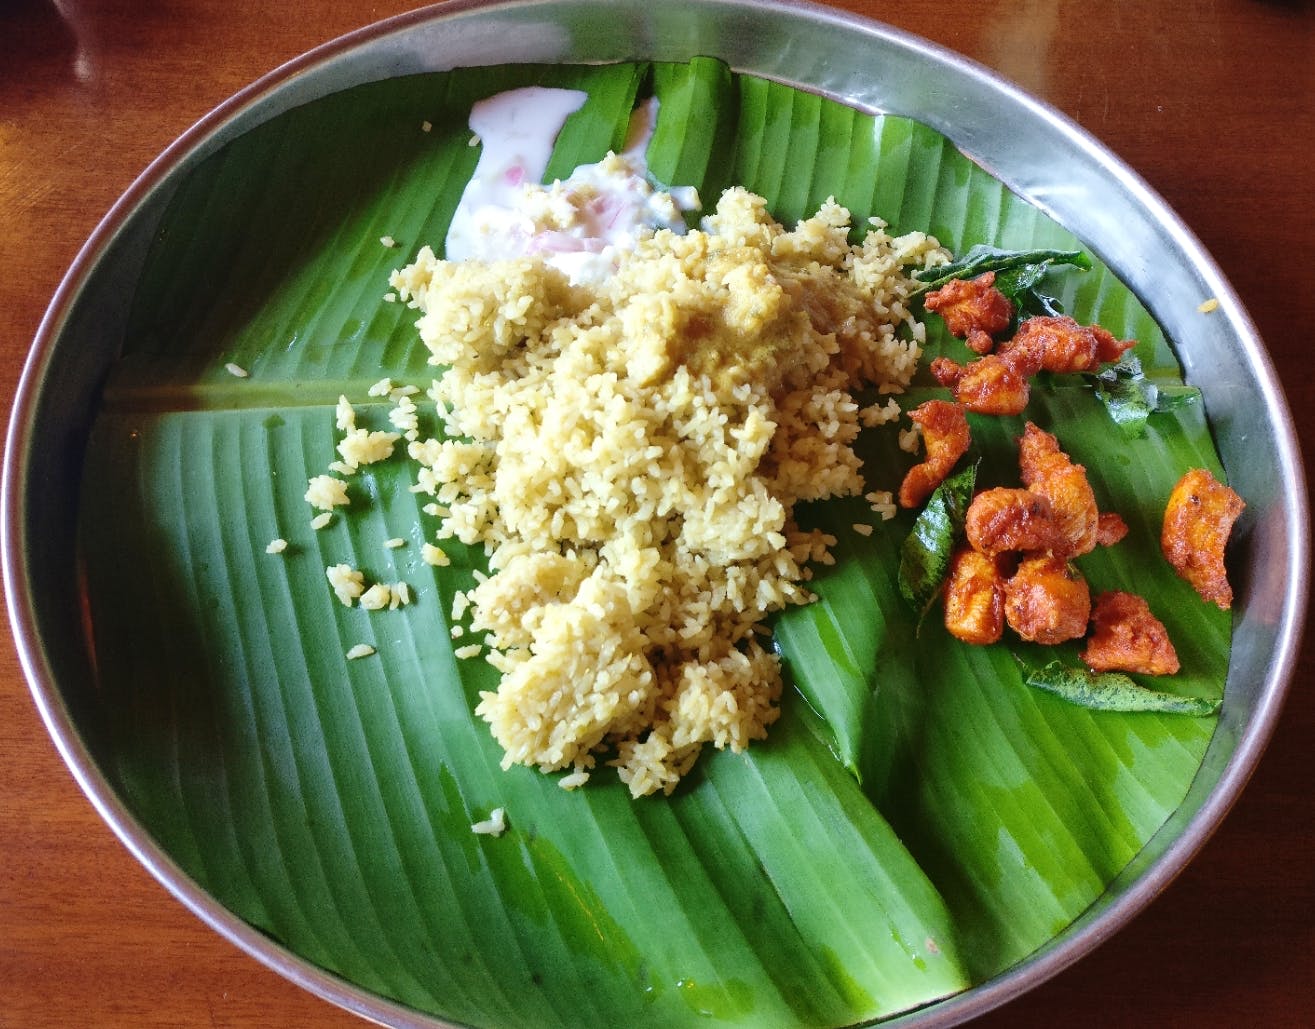 Dish,Food,Cuisine,Banana leaf rice,Ingredient,Steamed rice,Leaf,Banana leaf,Rice,Produce